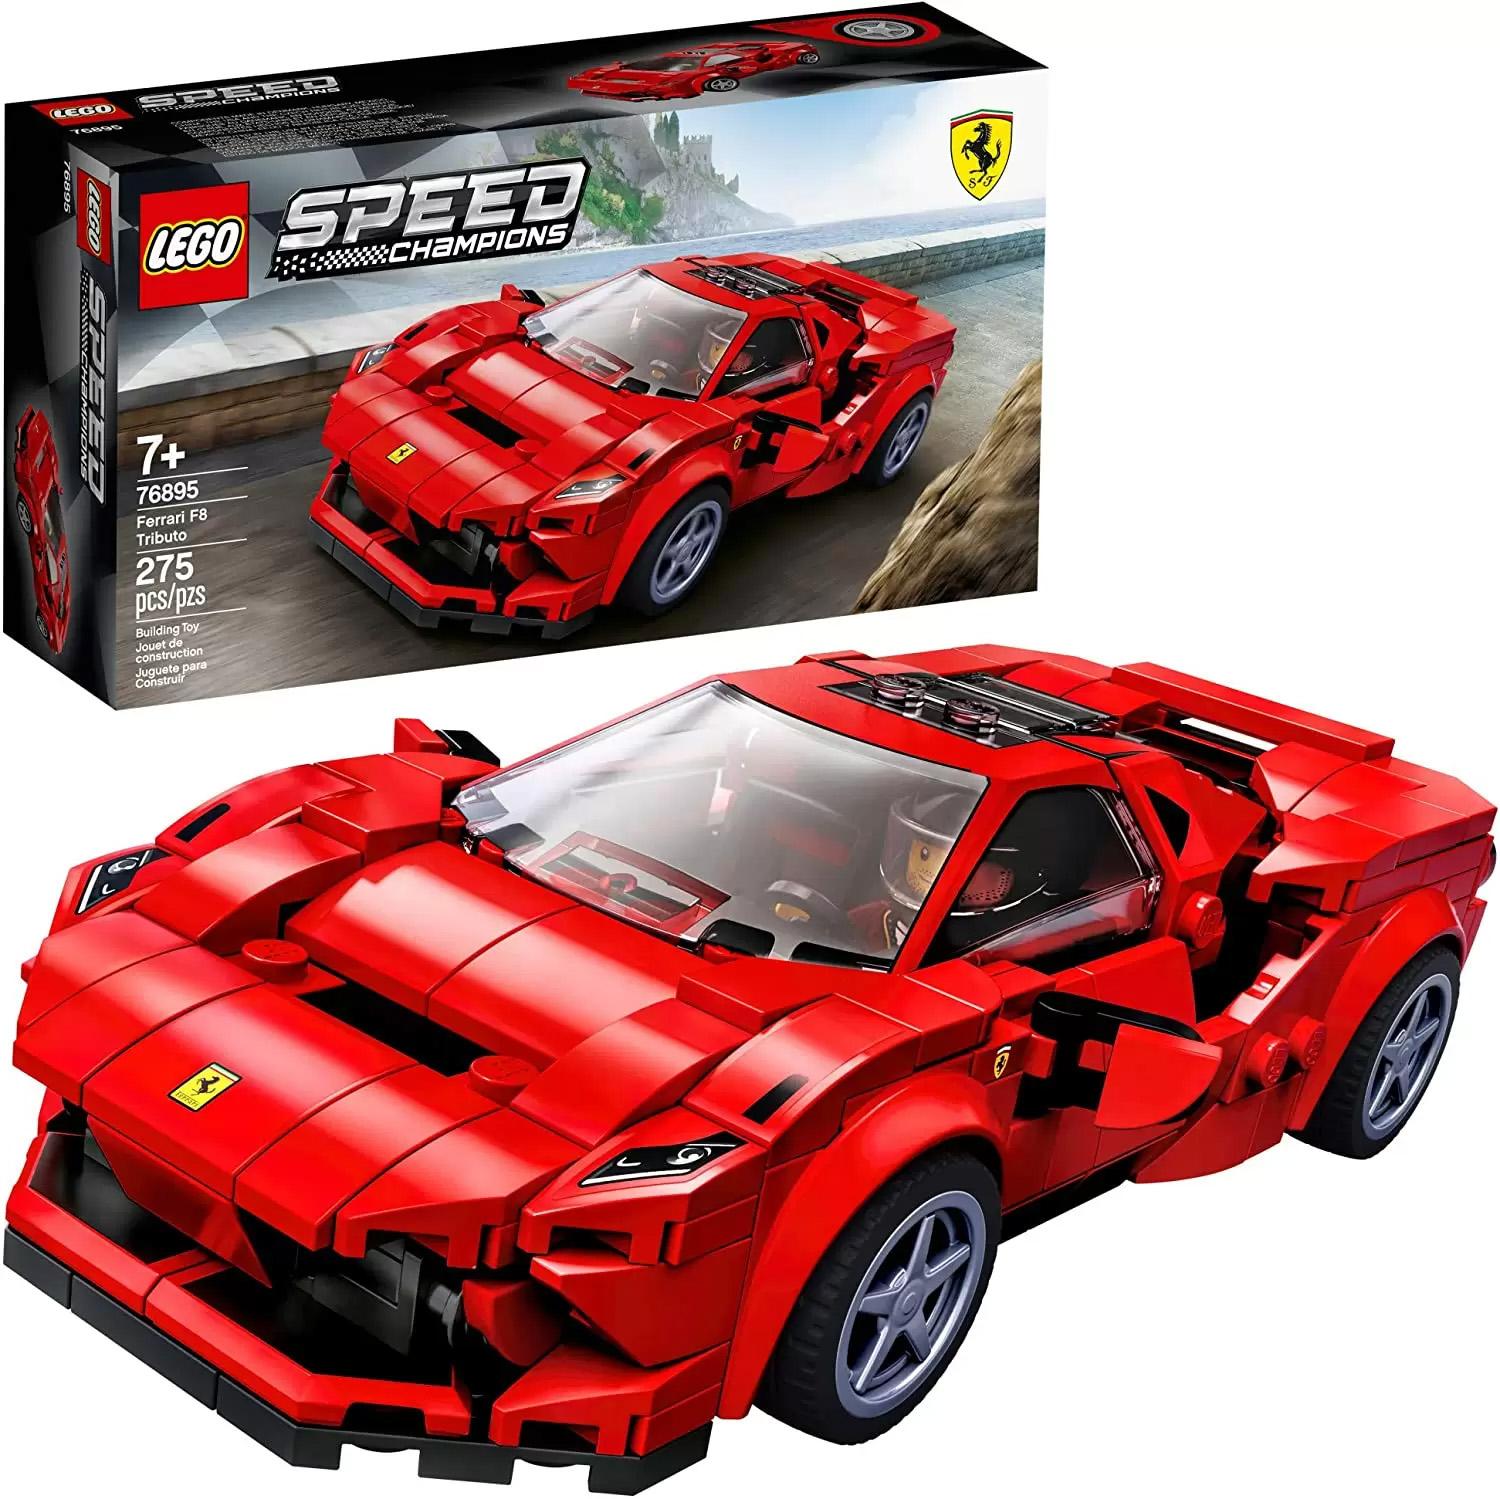 275-Piece LEGO Speed Champions Ferrari F8 Tributo Building Kit for $15.99